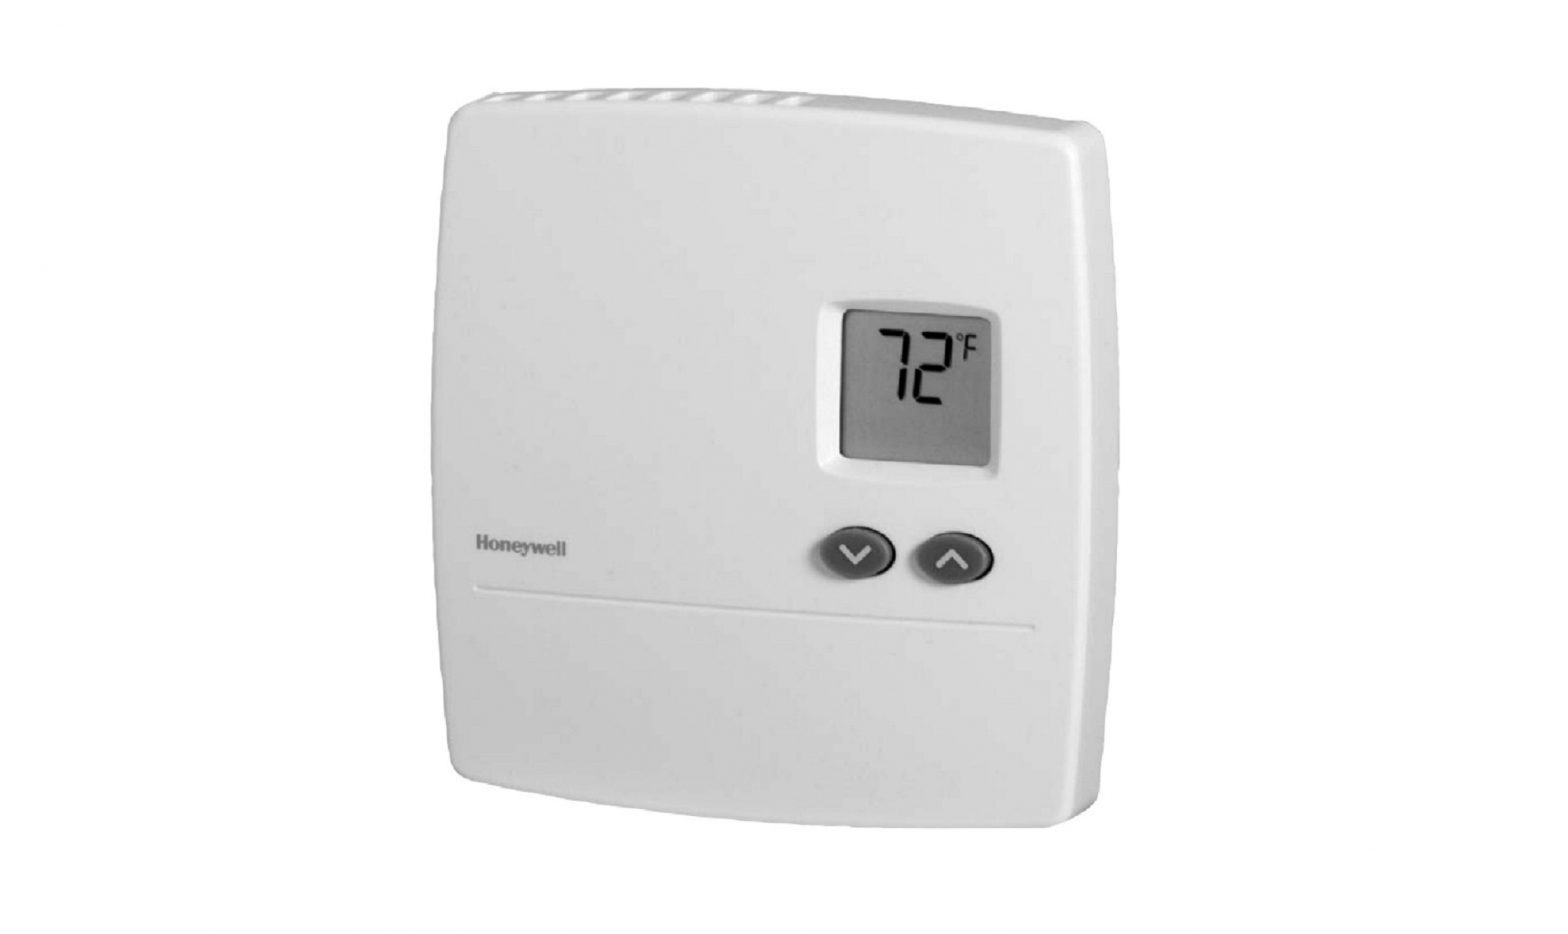 Honeywell RLV3100 Digital Thermostat Installation Guide